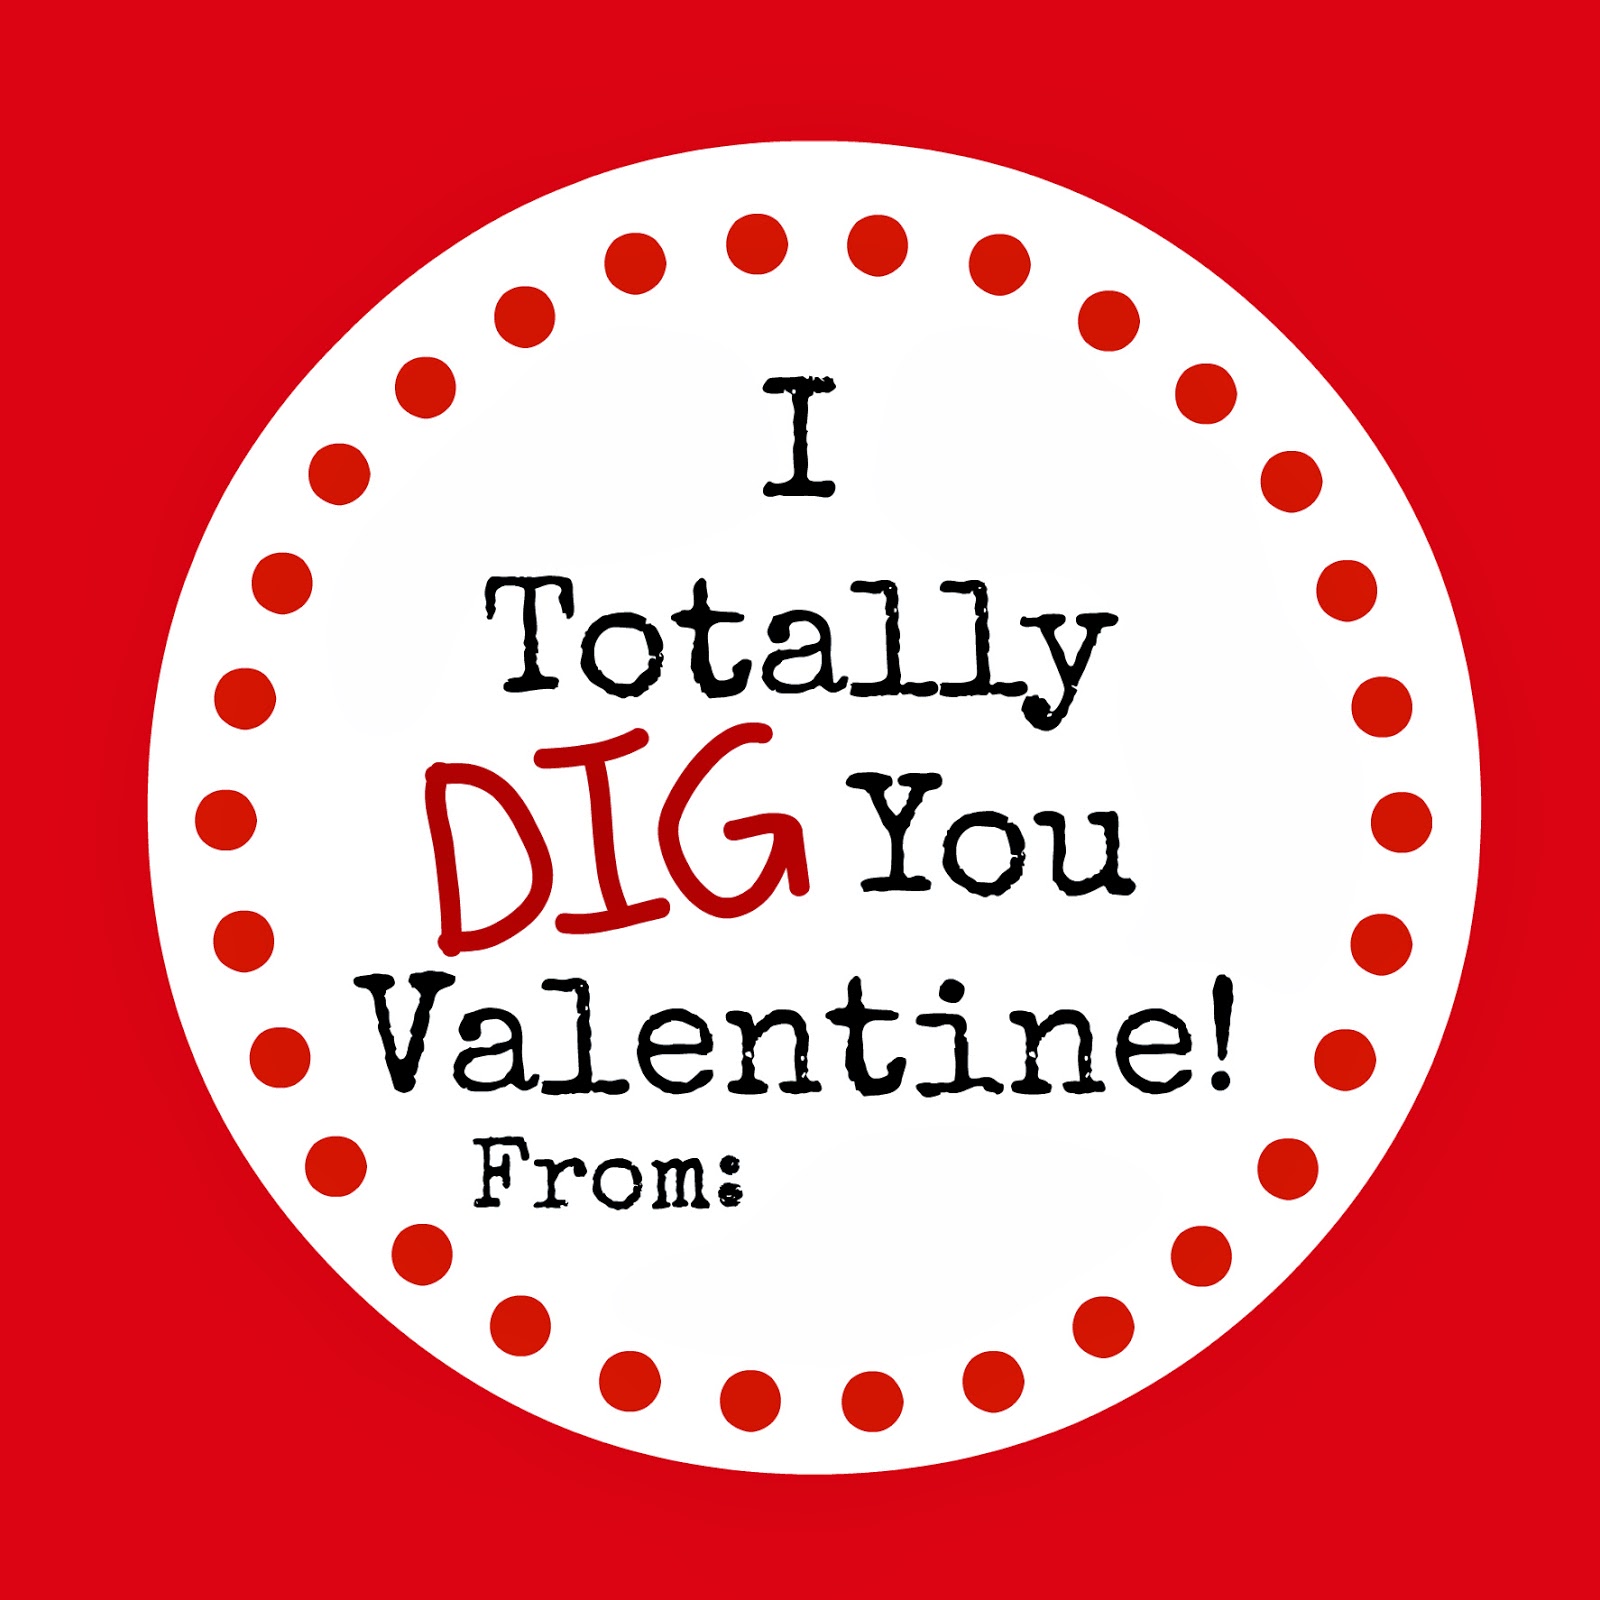 I Dig You Valentine Printable by whatdoesthecoxsay.com #printable #tutorial